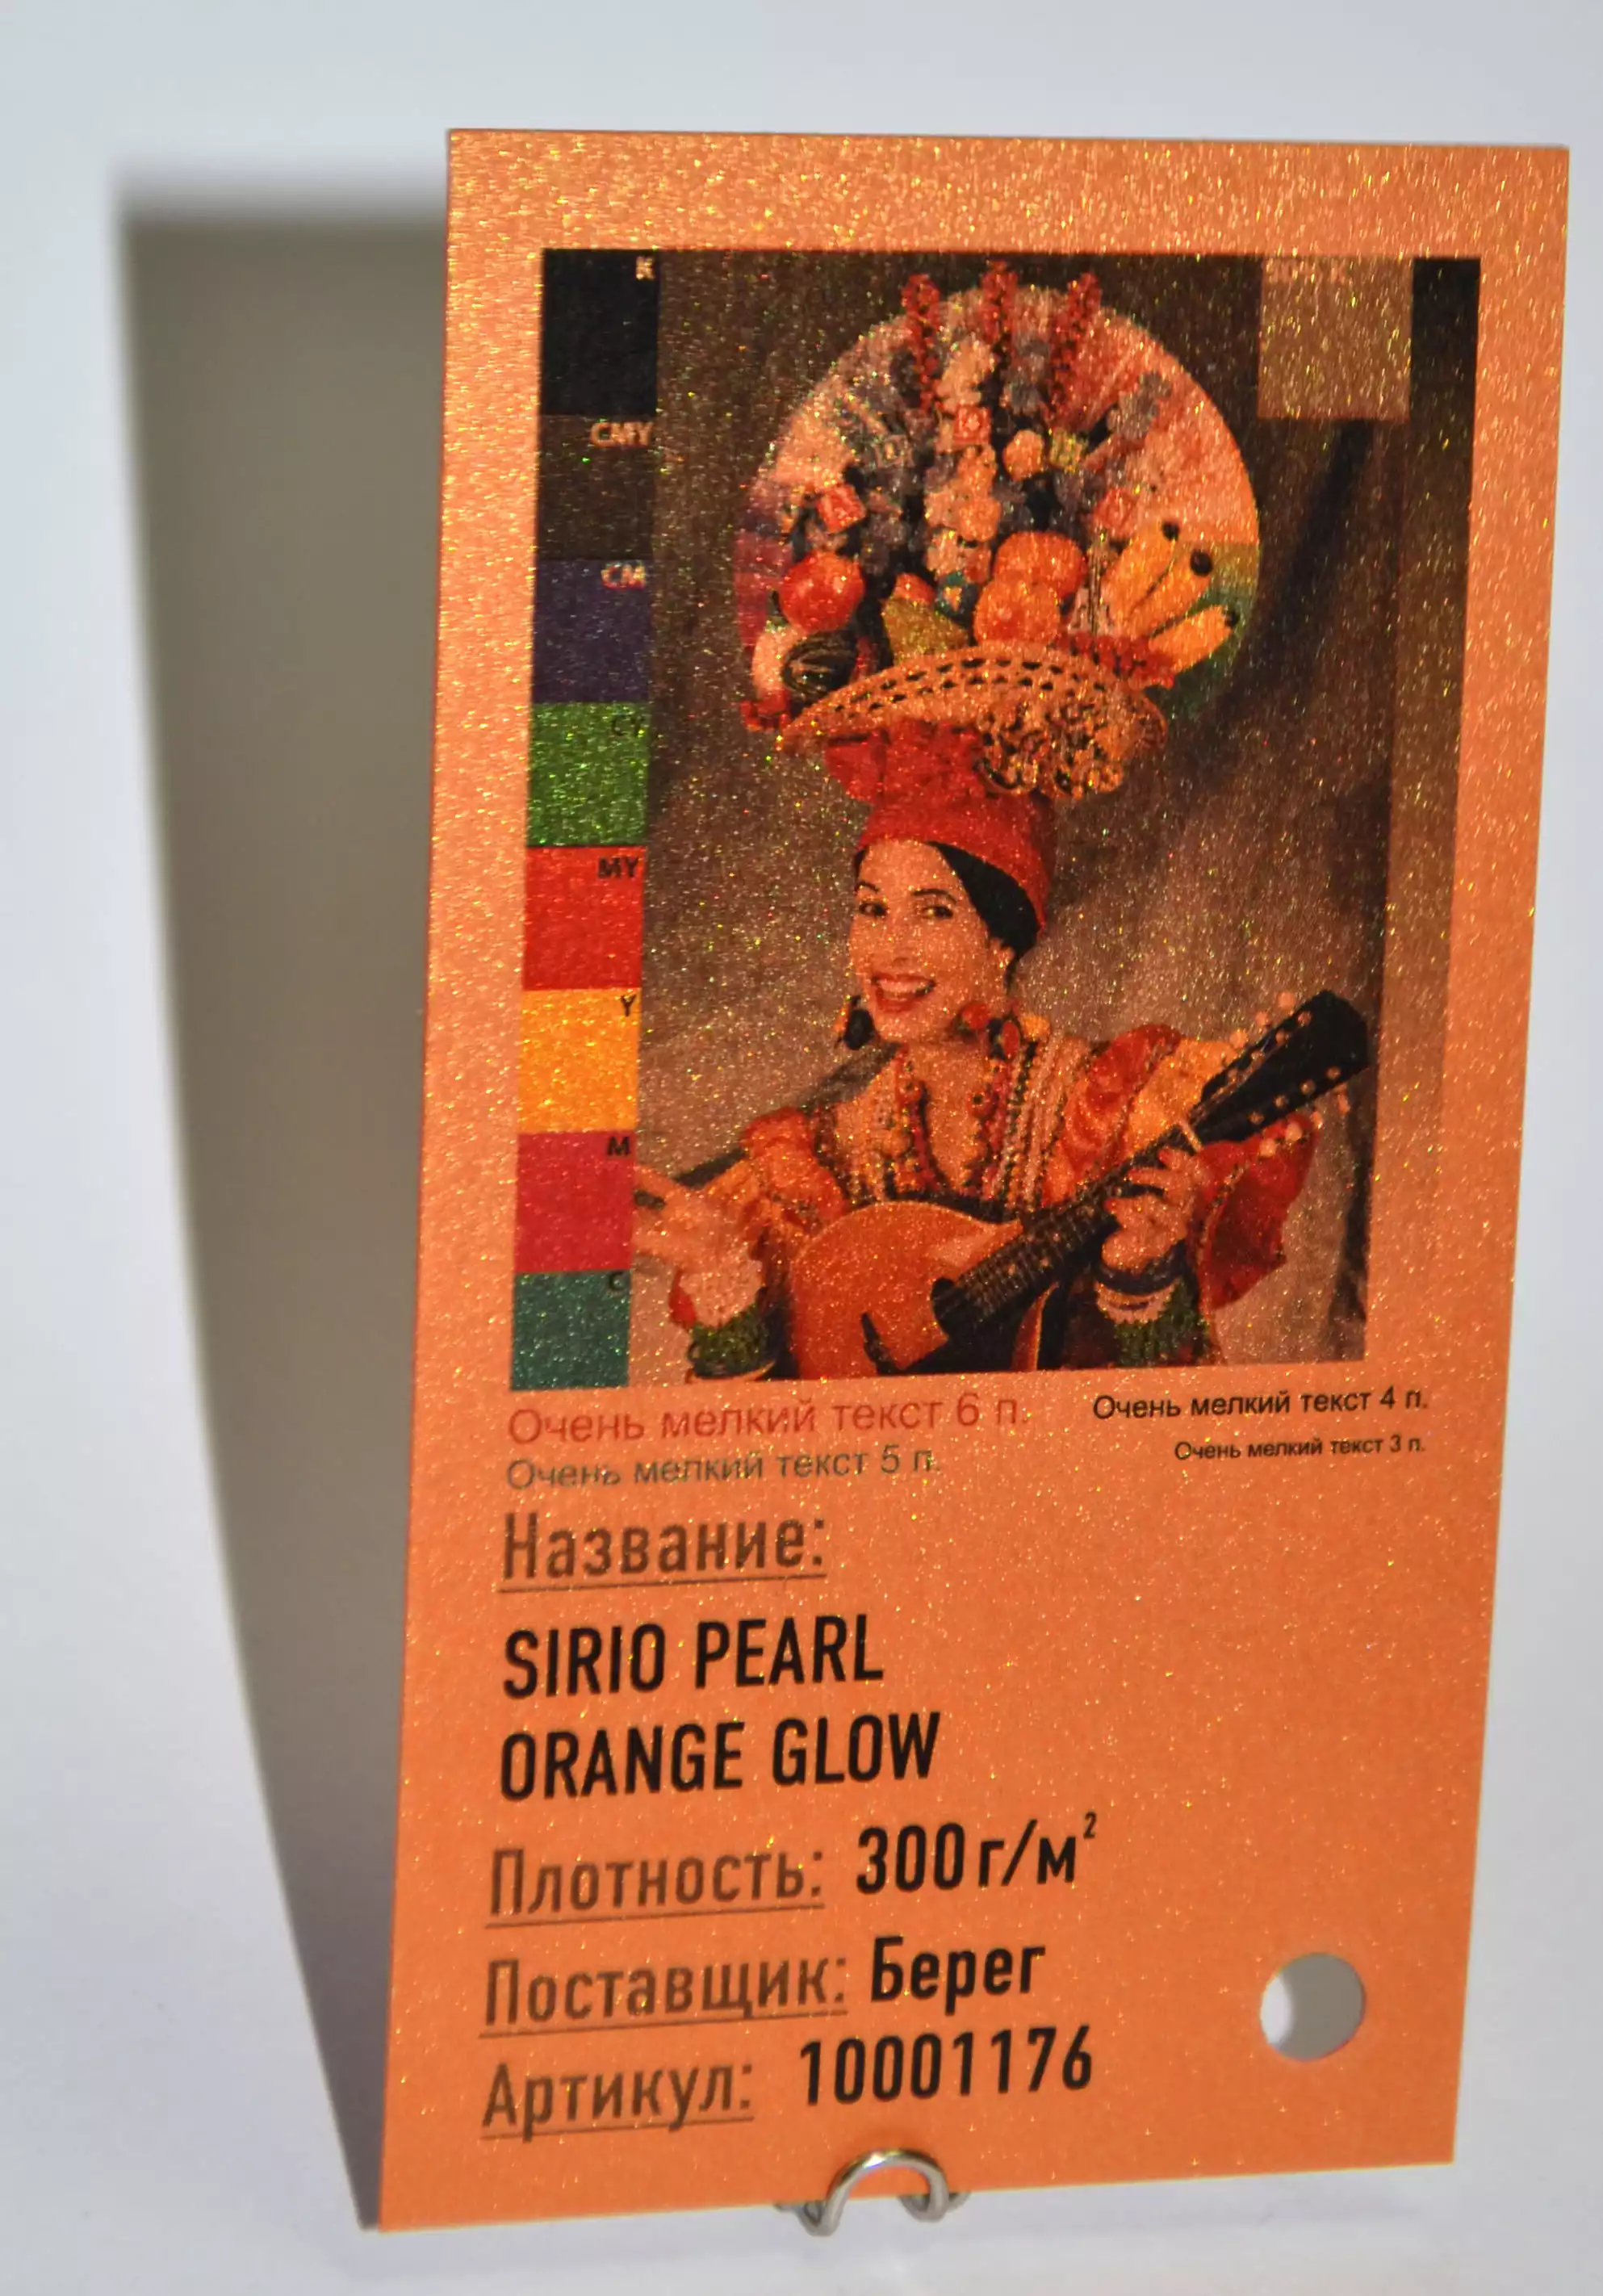 Sirio Pearl Orange Glow